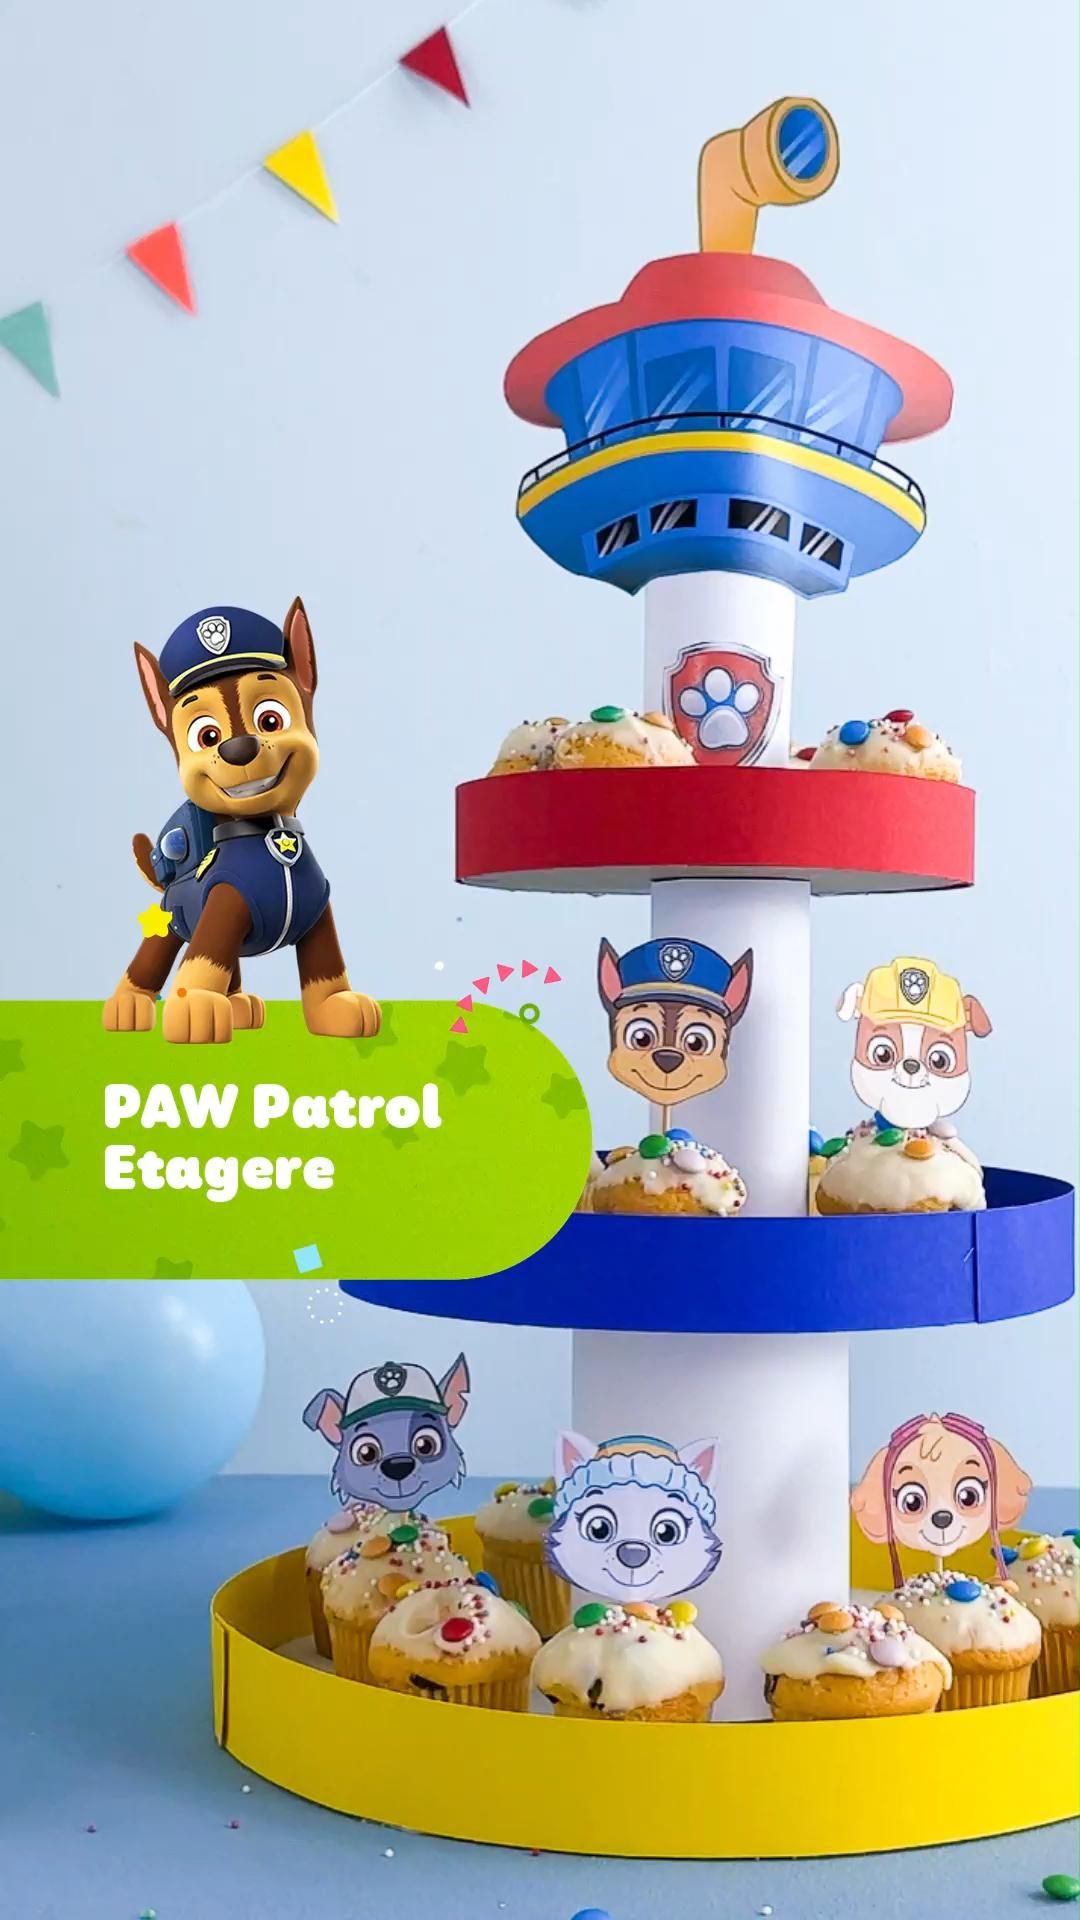 PAW Patrol Etagere